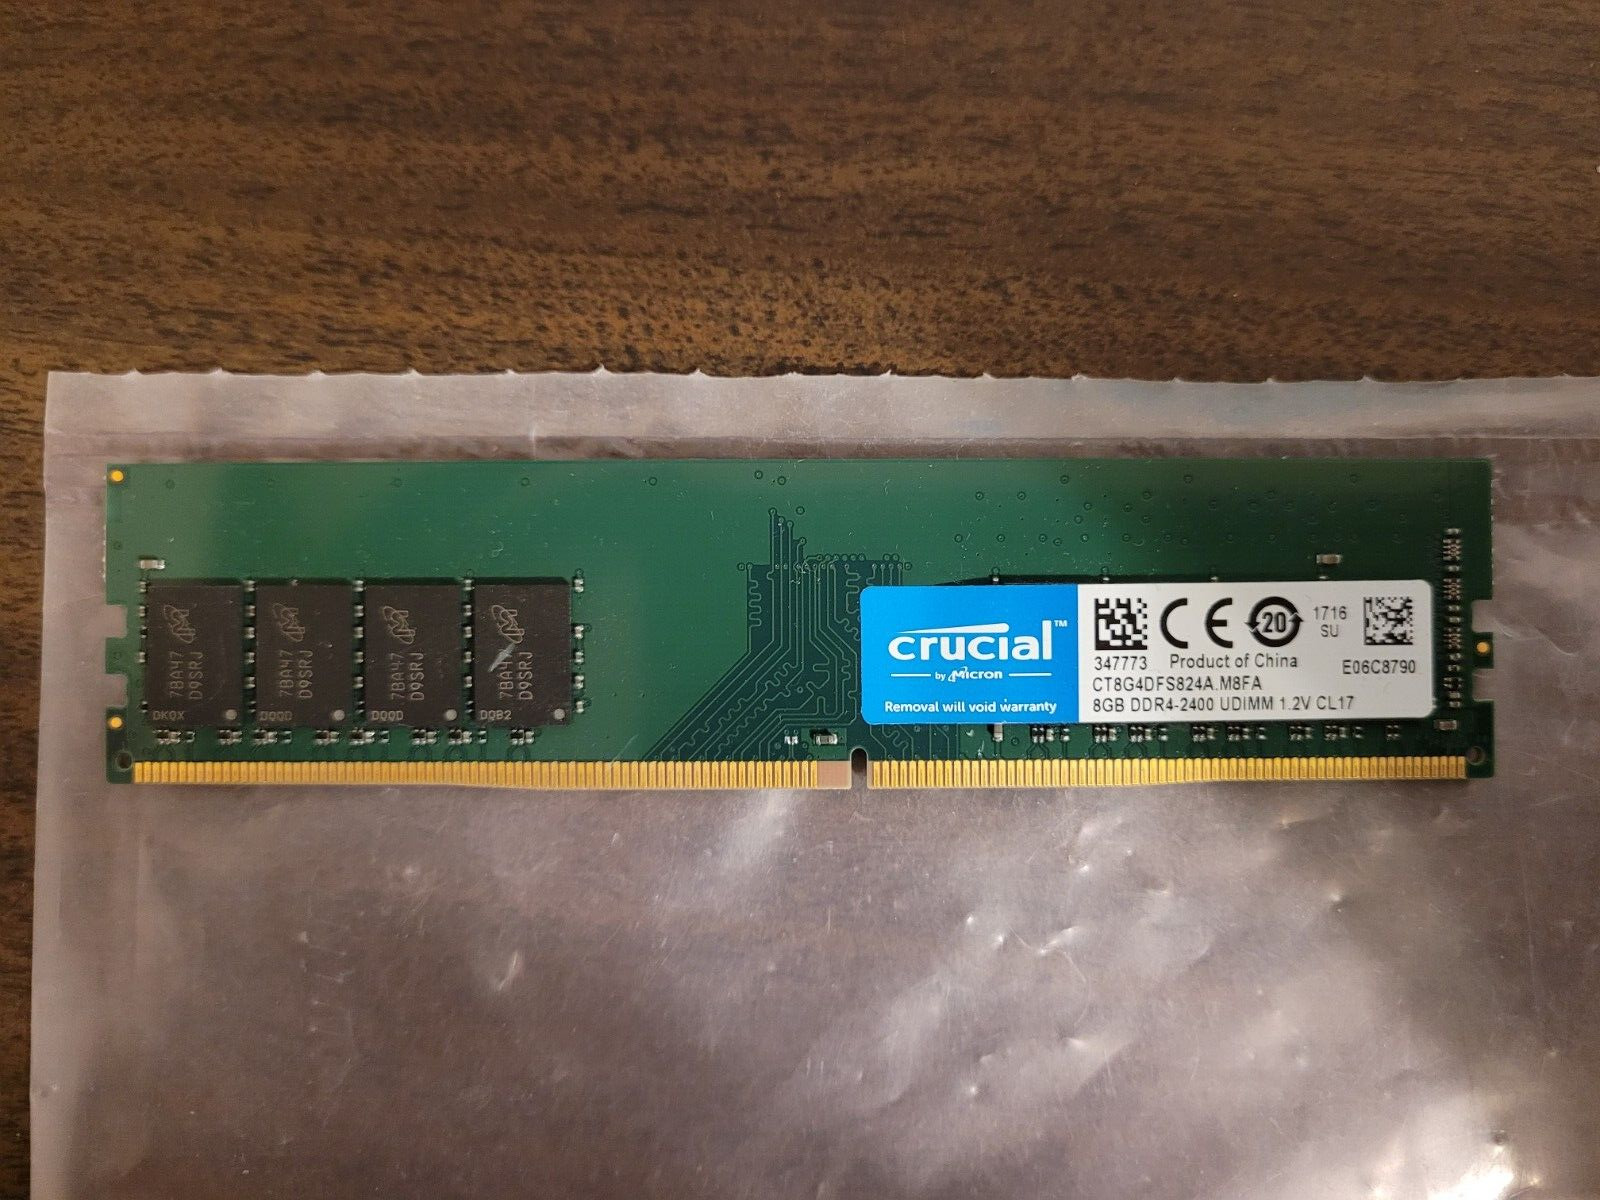 Crucial 8GB PC4-2400 PC4 19200 DDR4 2400MHz CL17 1.2V Desktop Memory RAM